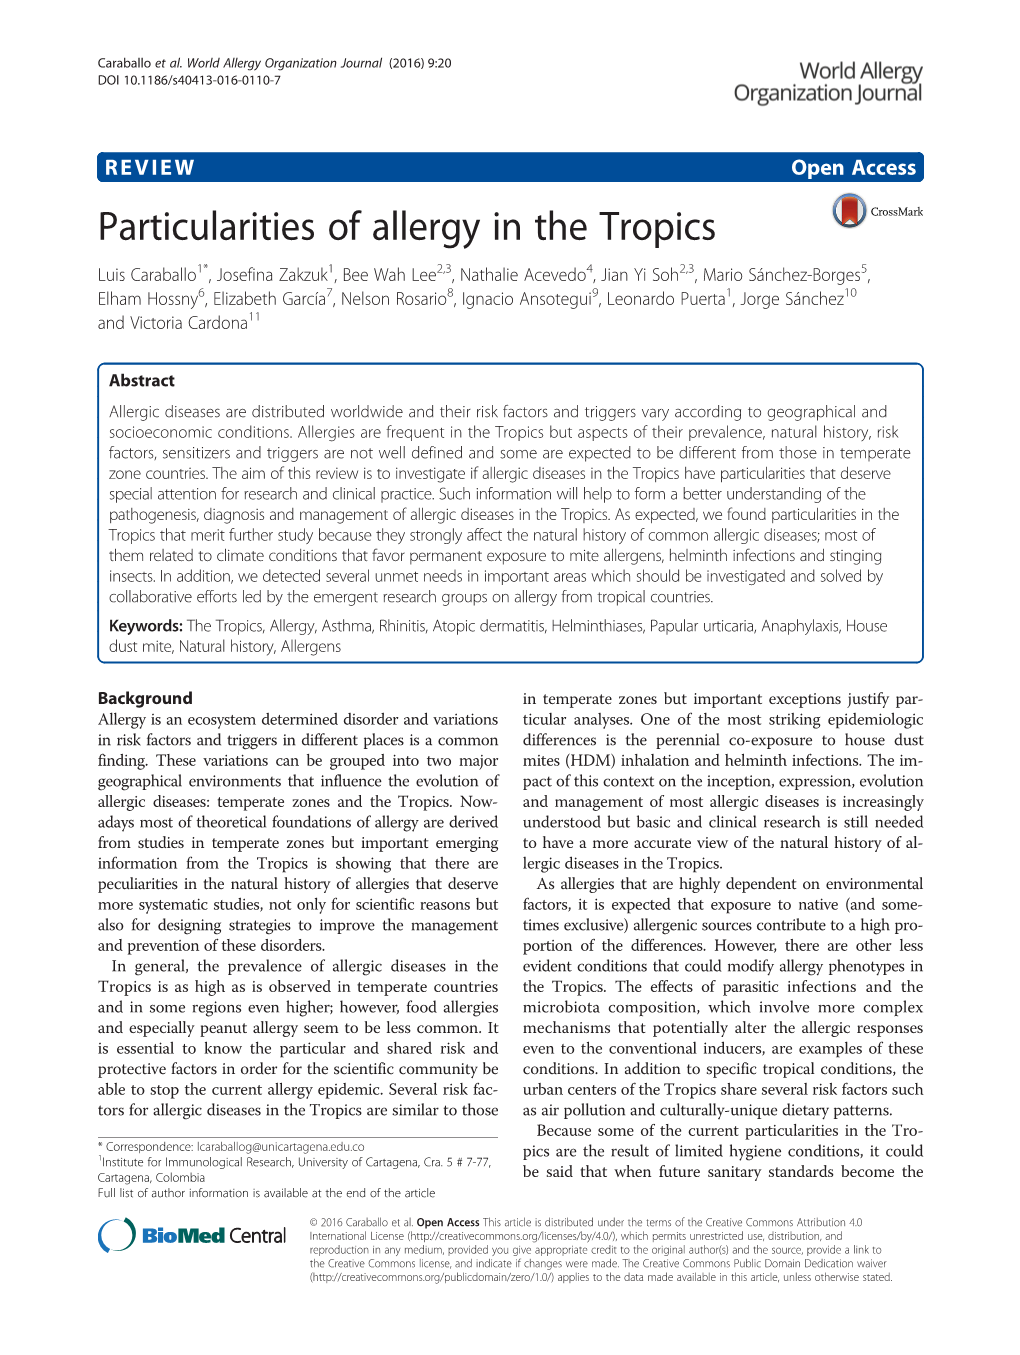 Particularities of Allergy in the Tropics